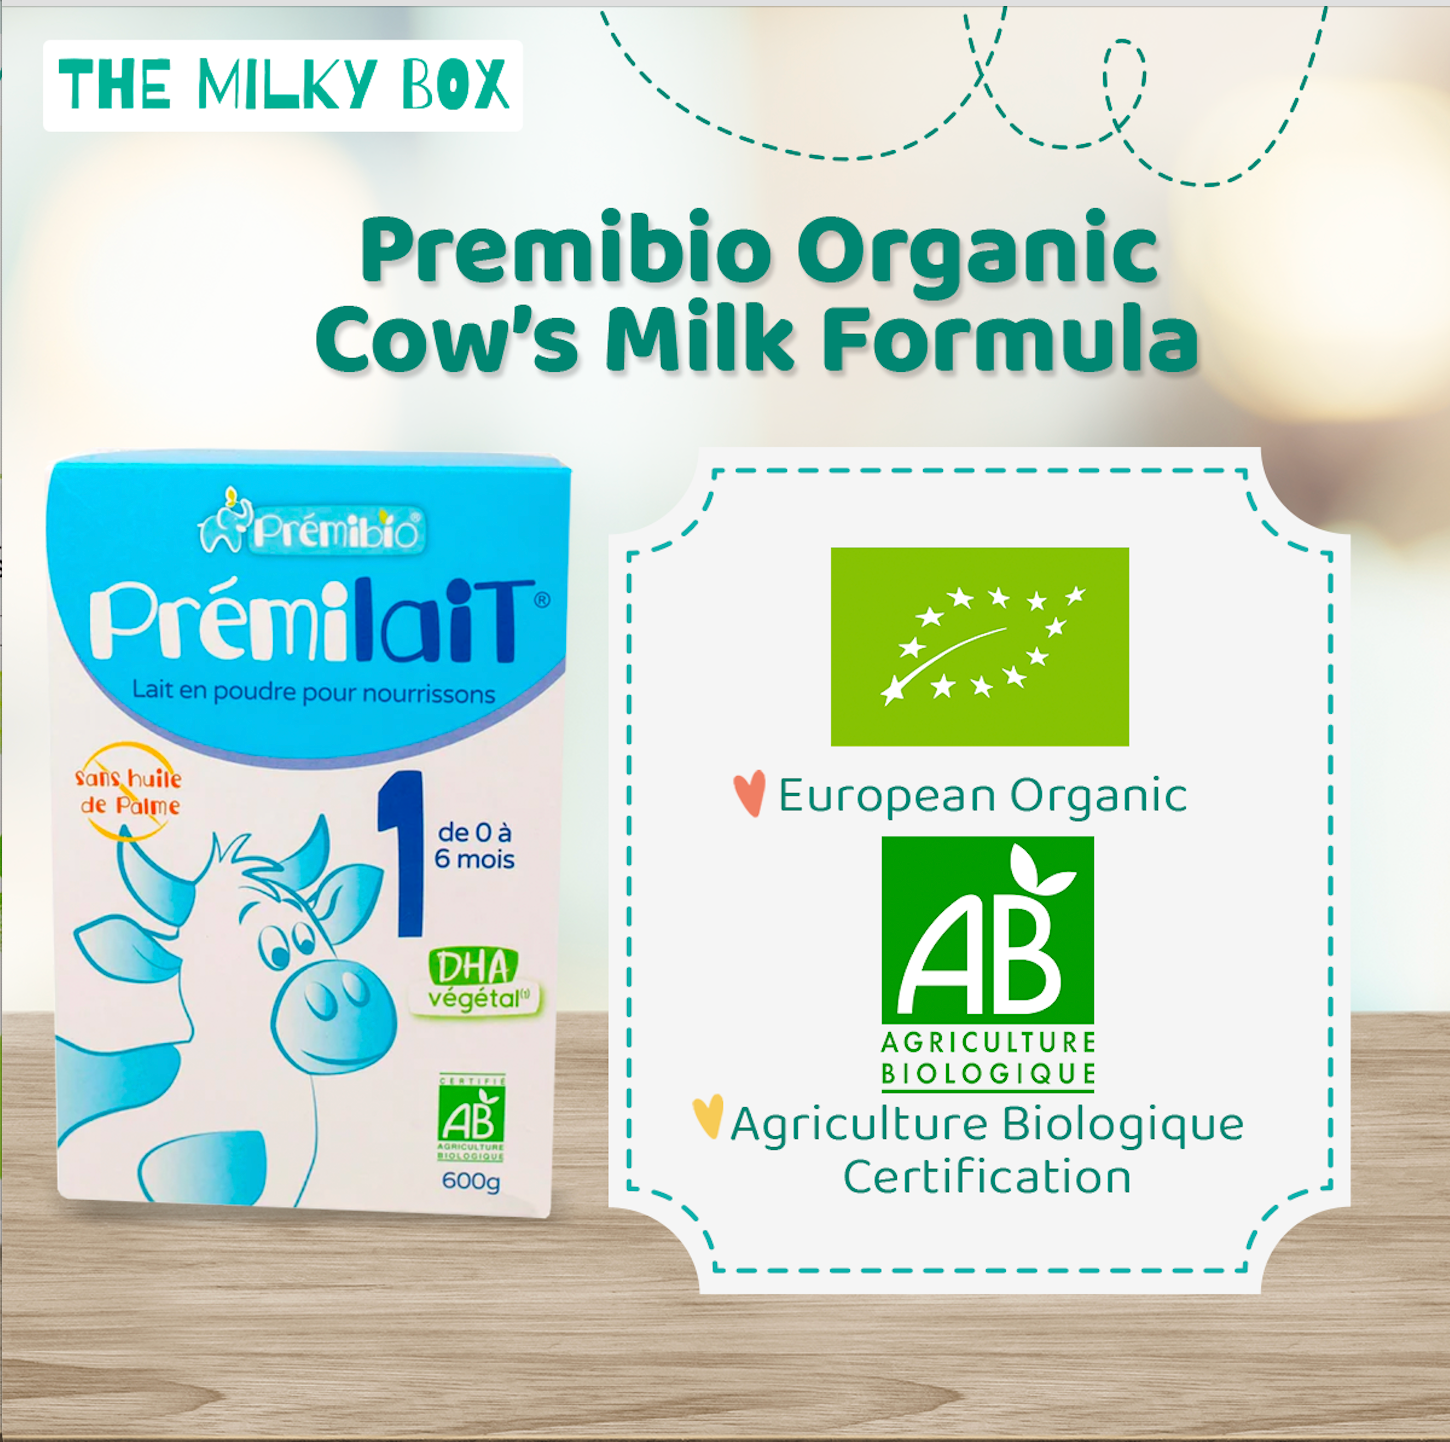 Premibio Organic Cow’s Milk Formula